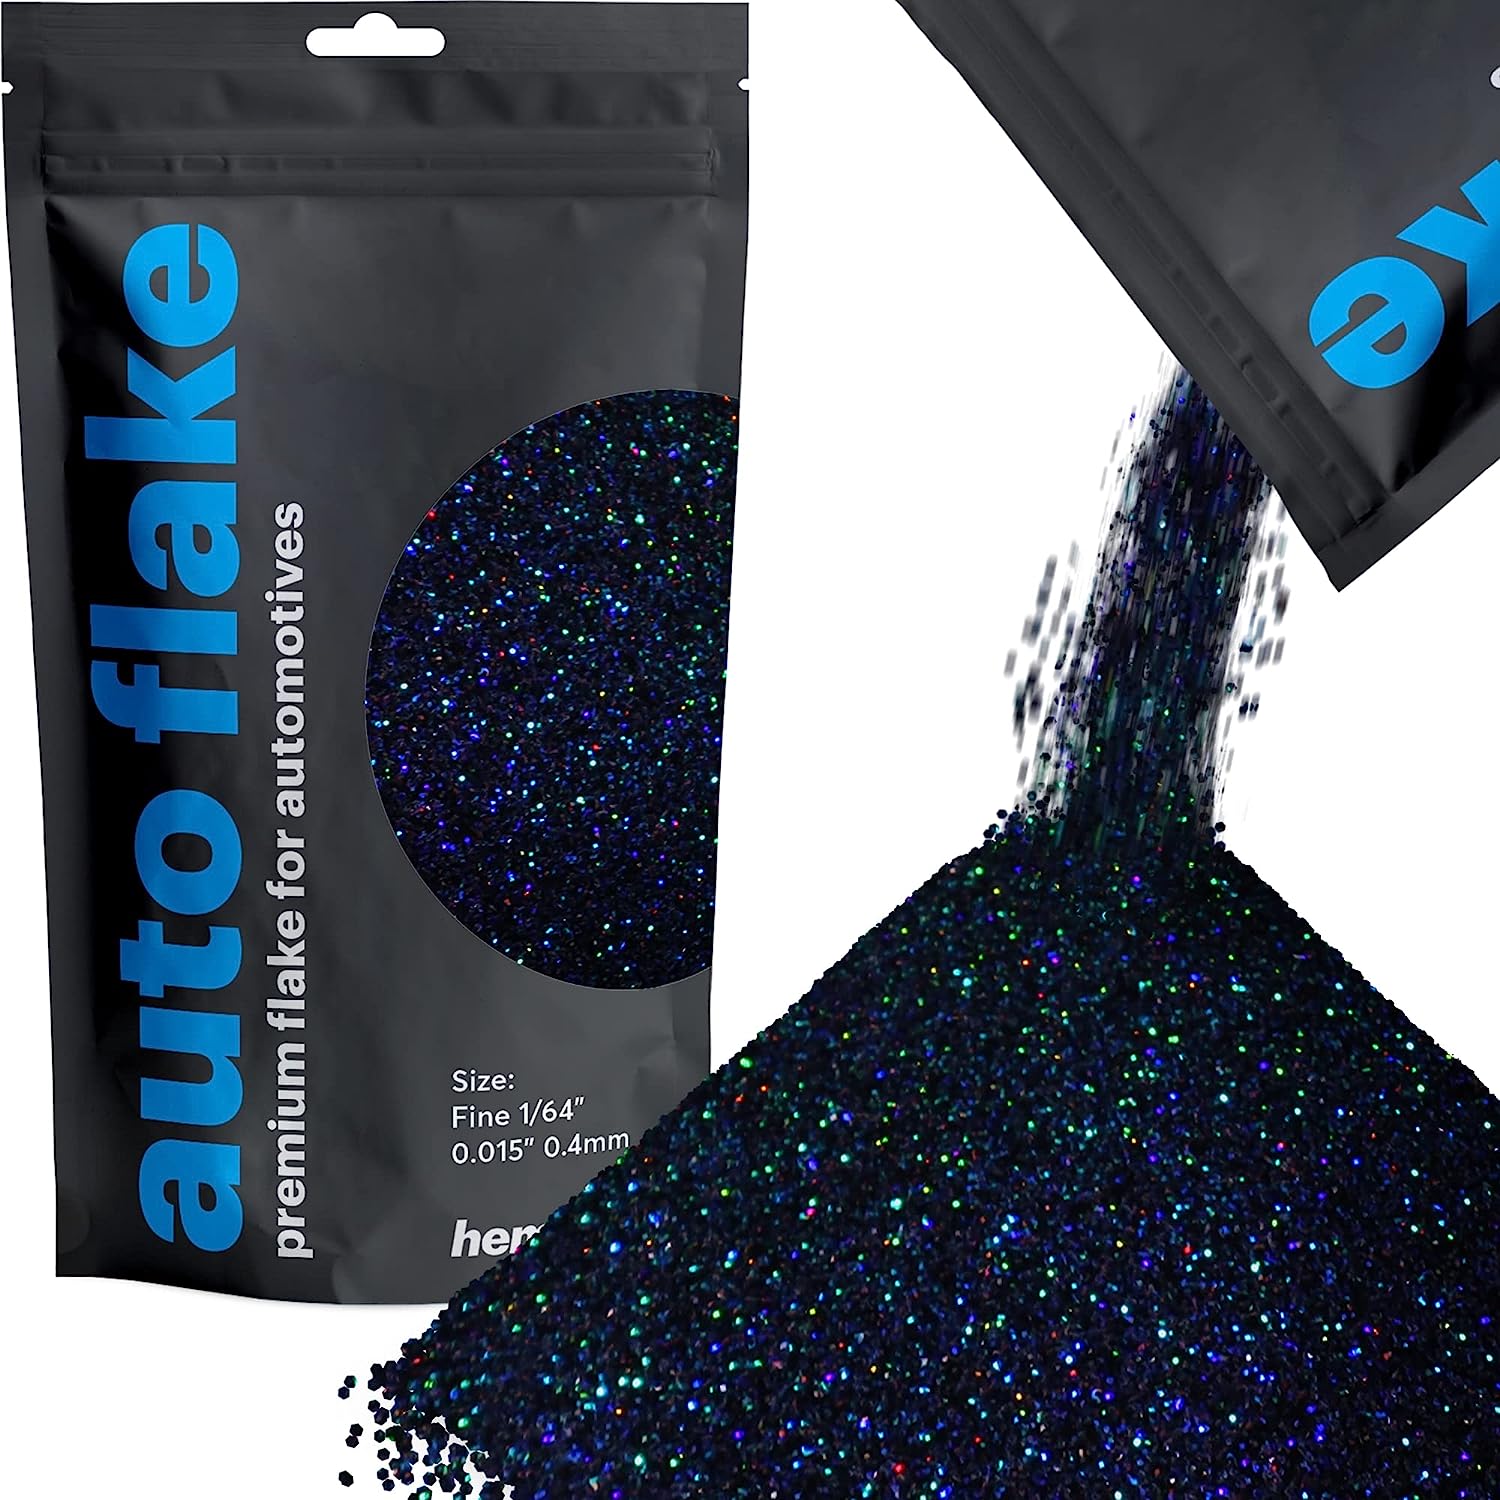 Hemway Auto Metal Flake Premium Glitter Paint Additive [...]